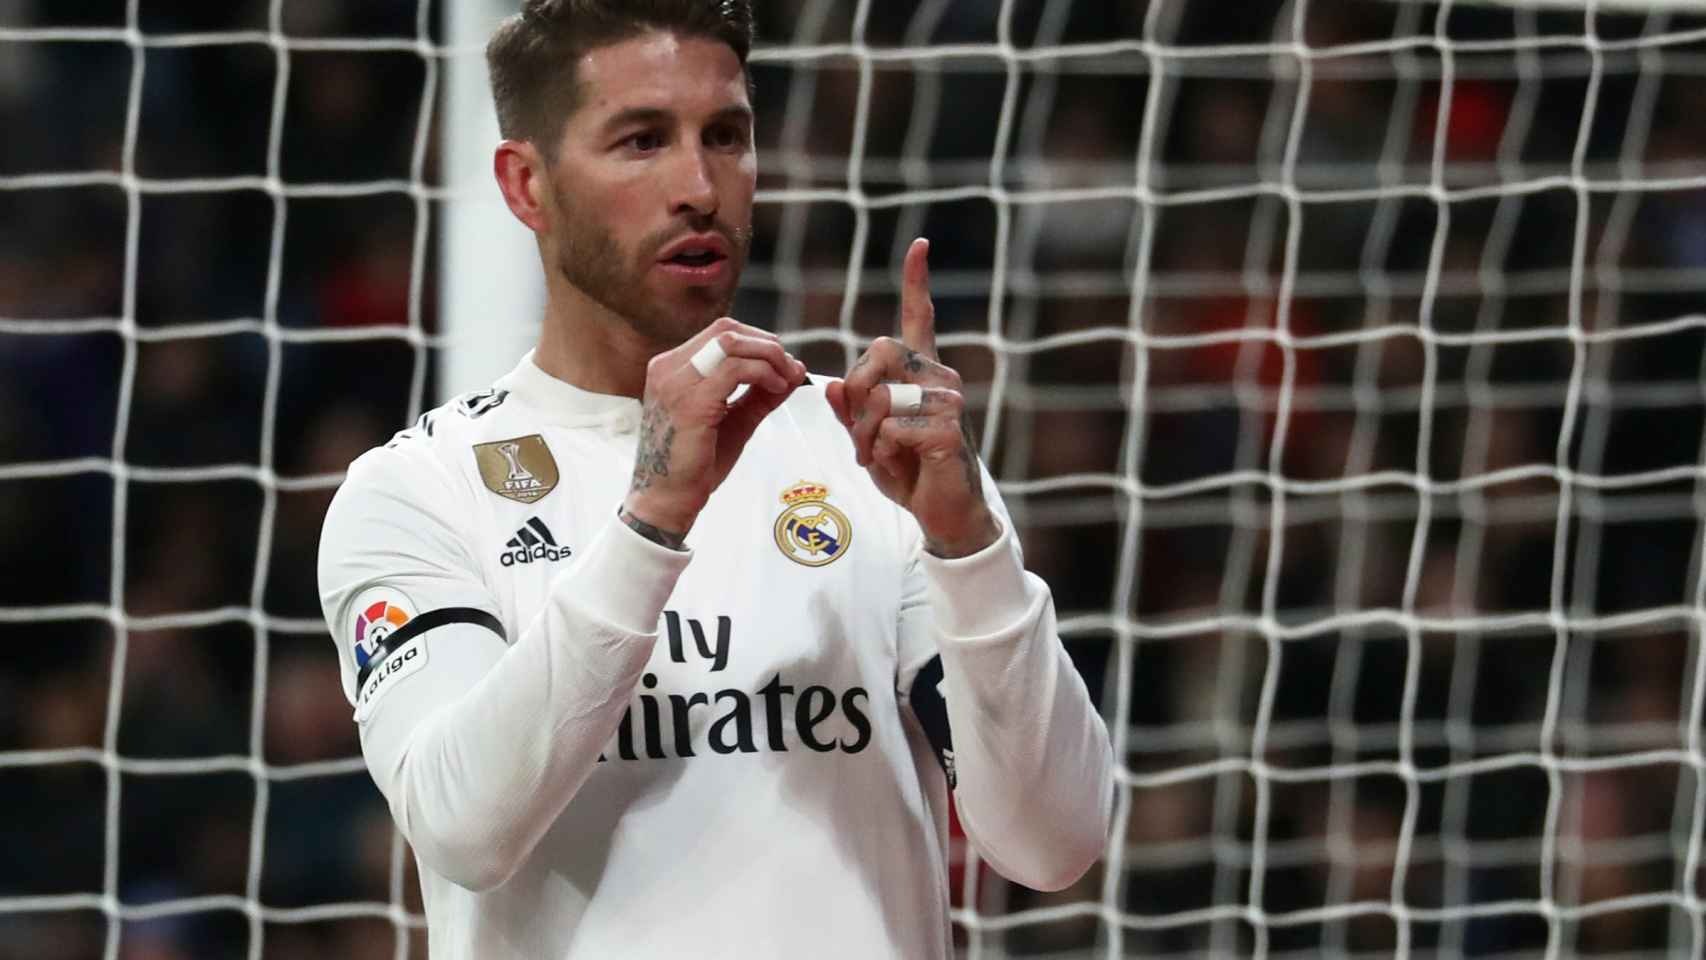 Sergio Ramos celebra su gol de penalti al Leganés